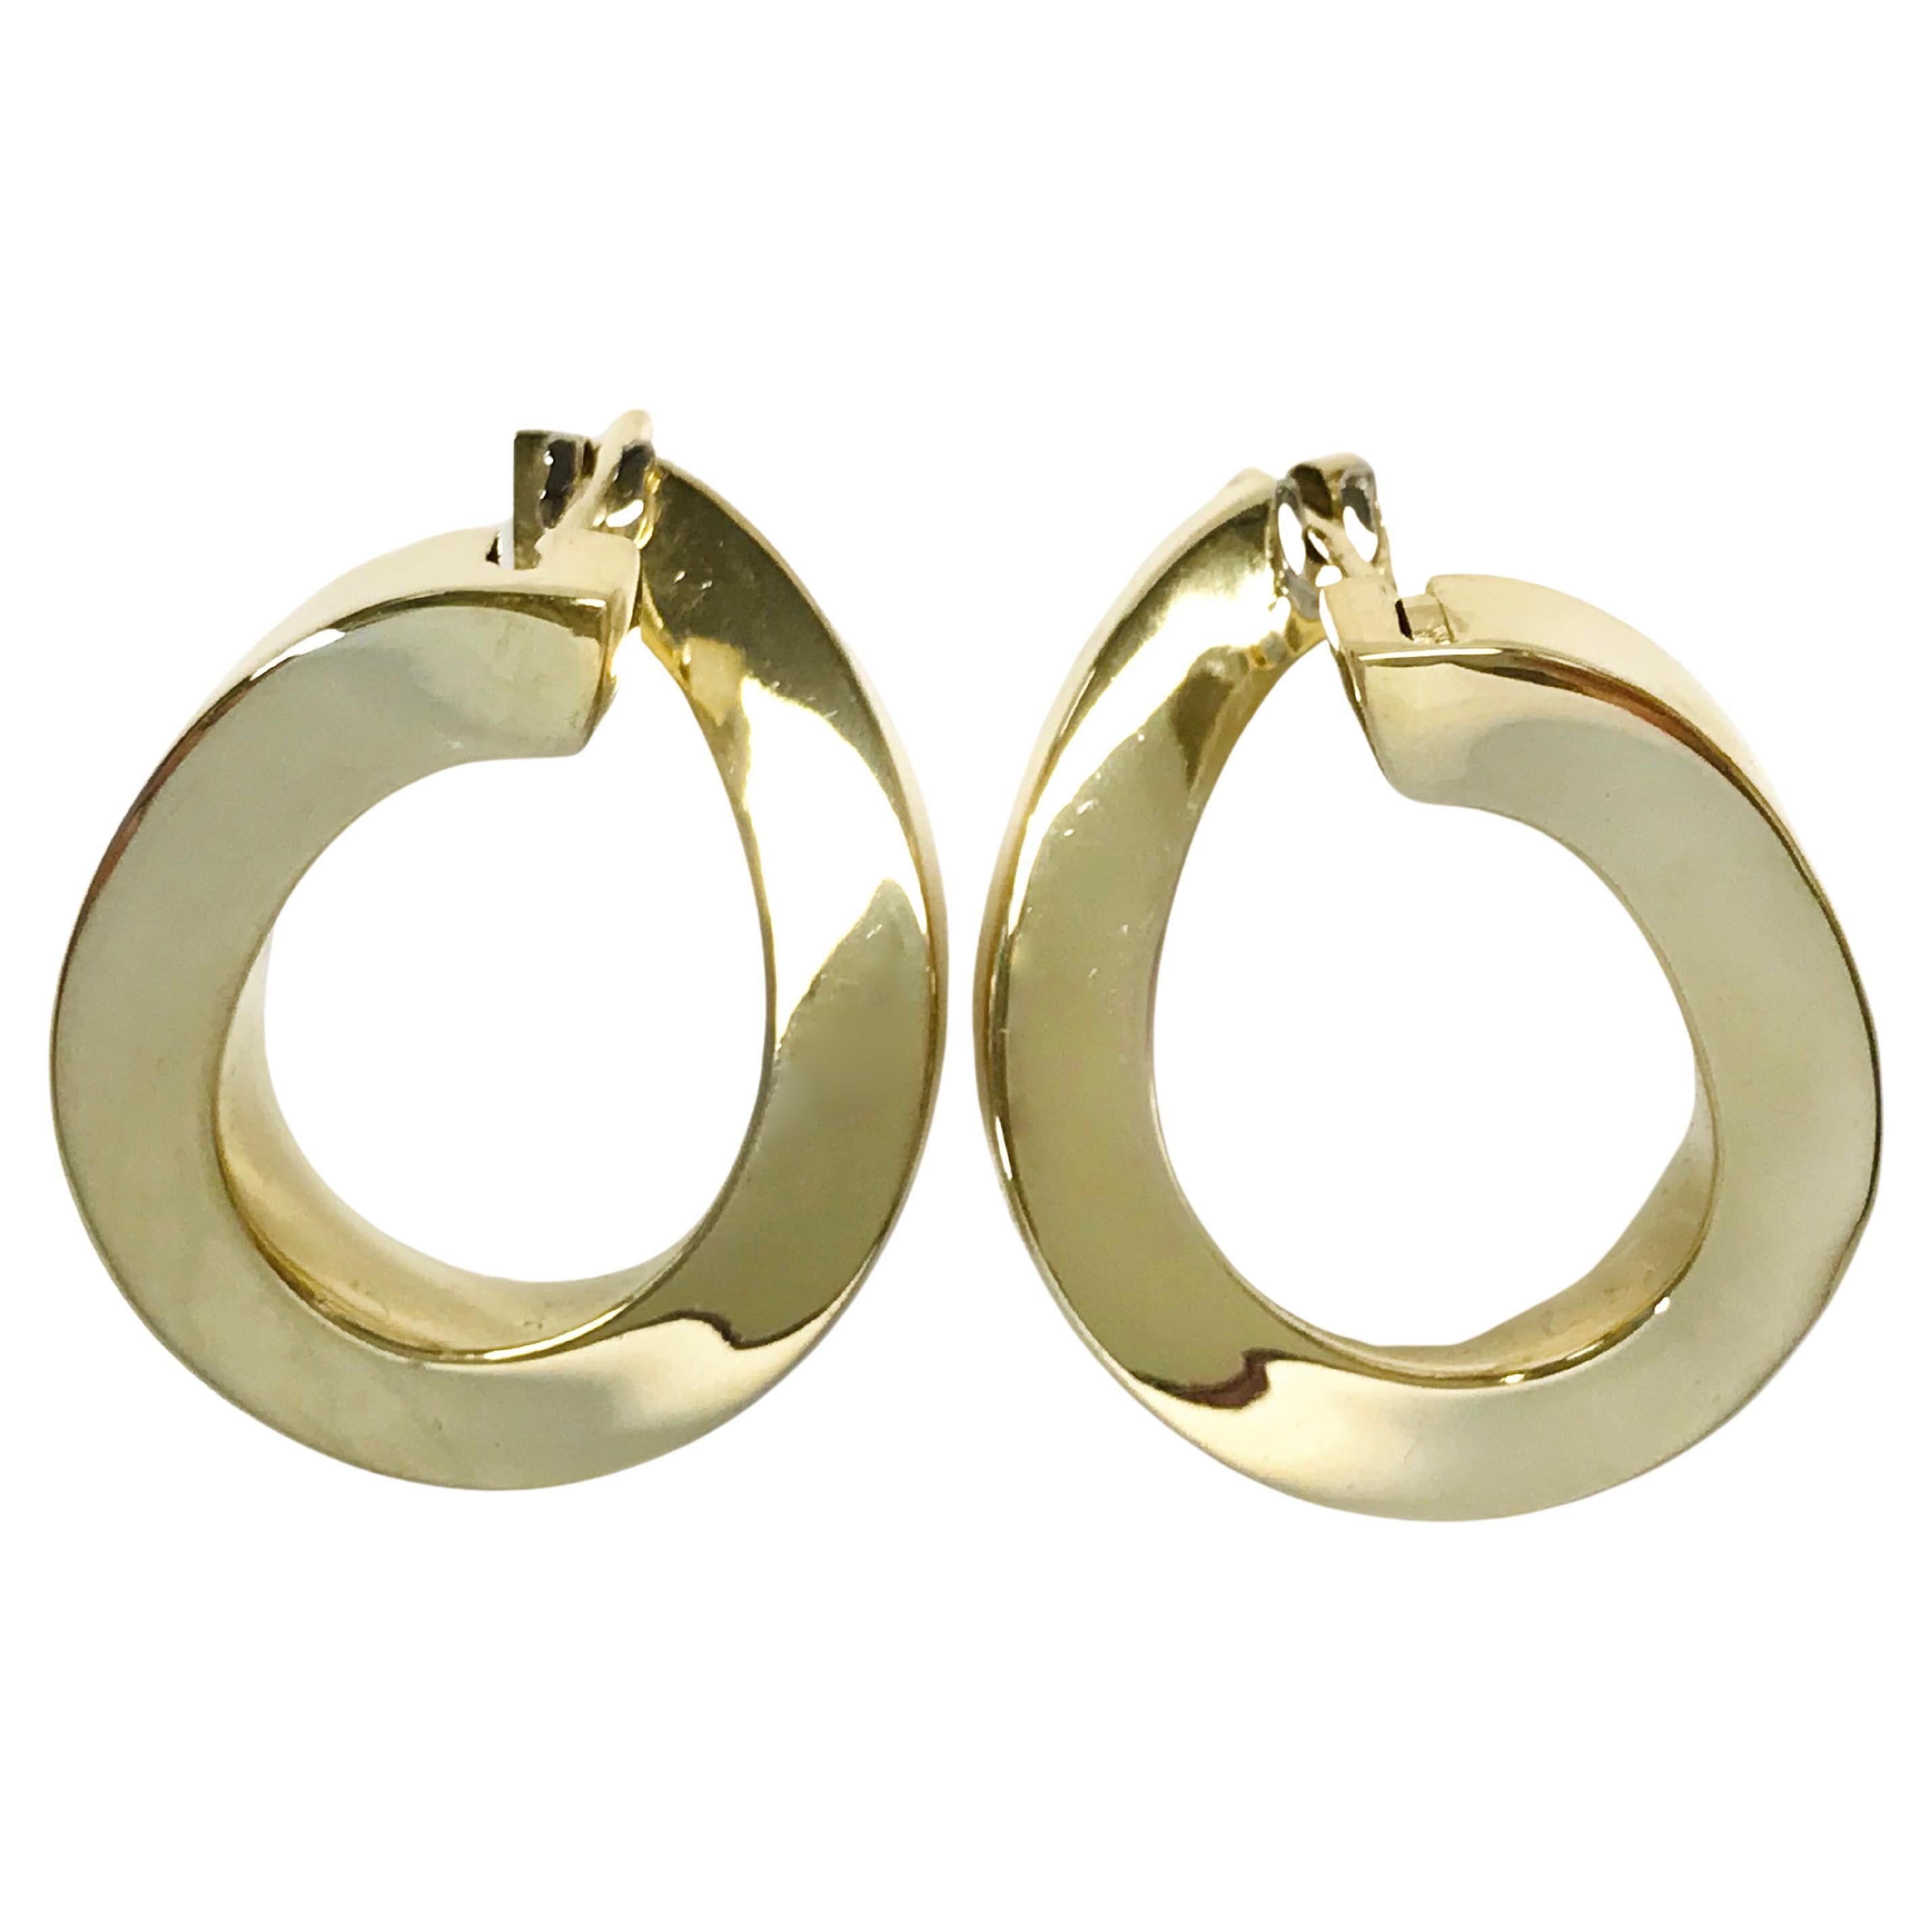 Pesavento Yellow Gold Hoop Earrings